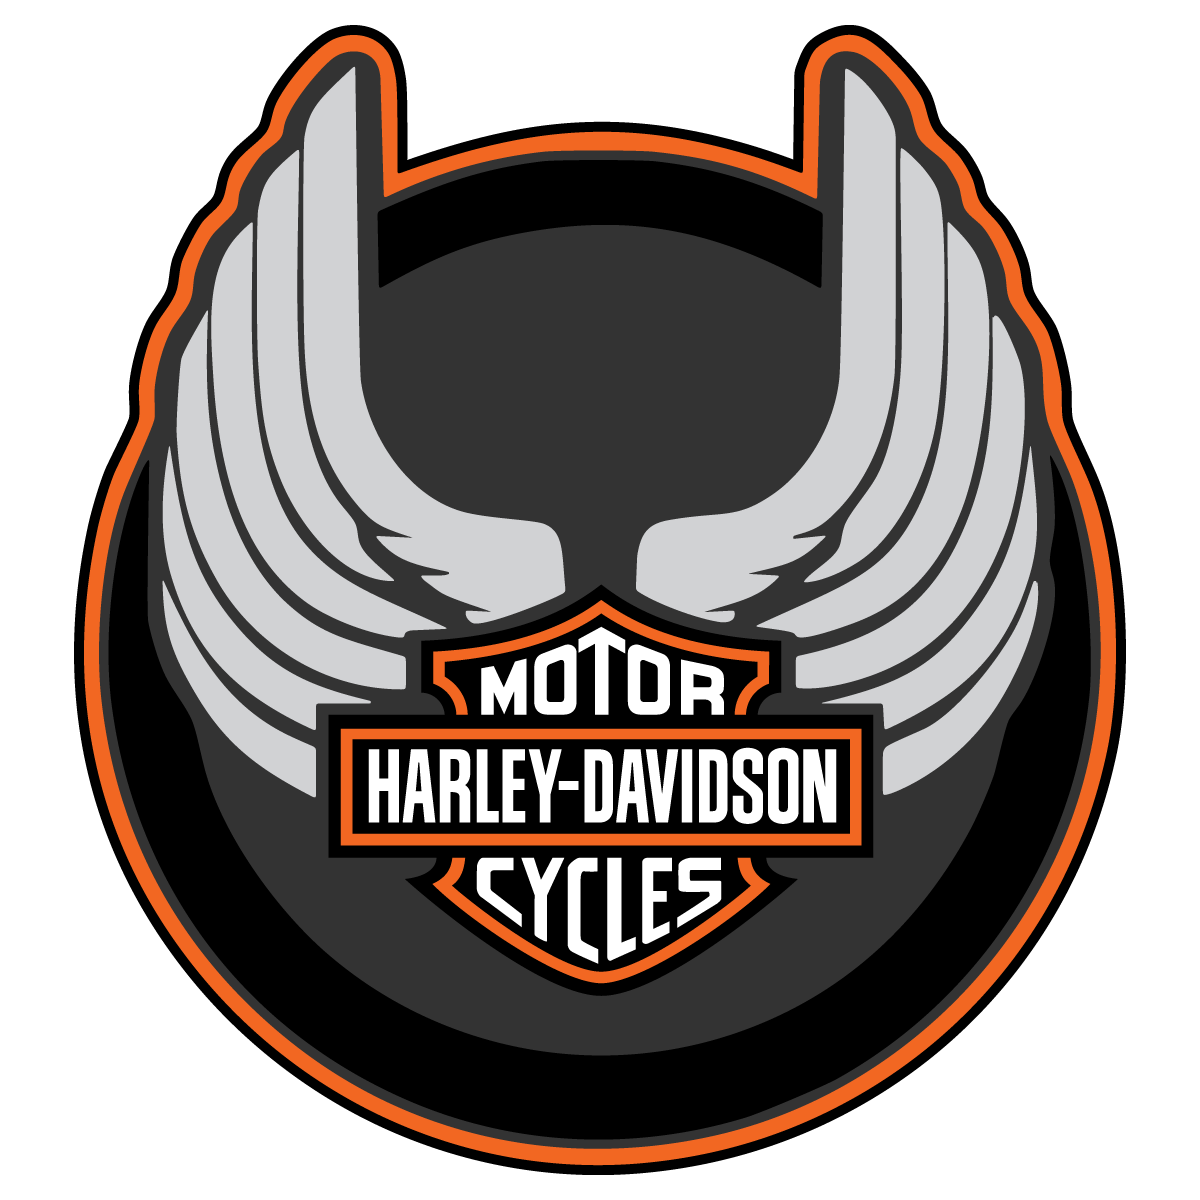 Download Harley Davidson Logo Silhouette at GetDrawings.com | Free ...